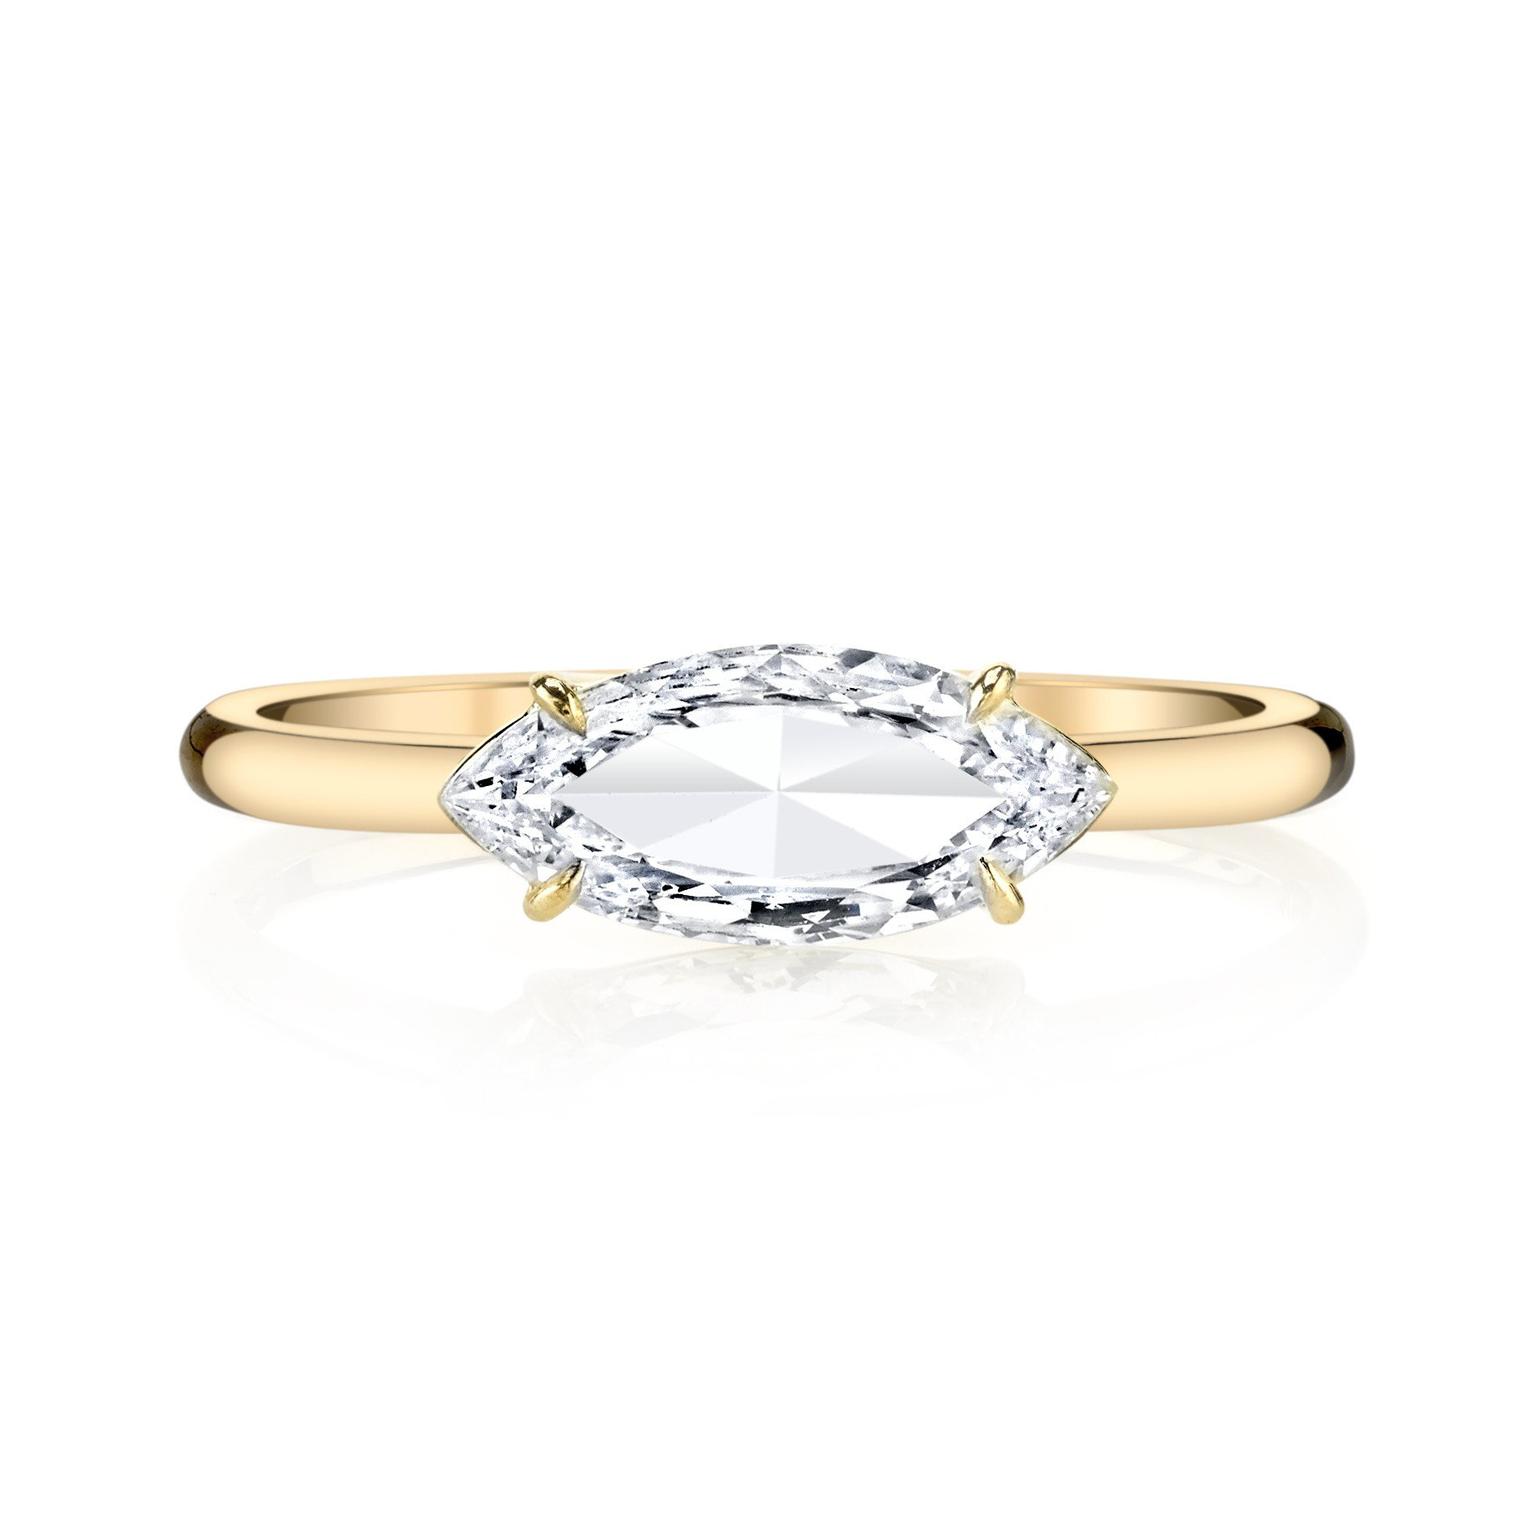 Anita Ko marquise diamond engagement ring